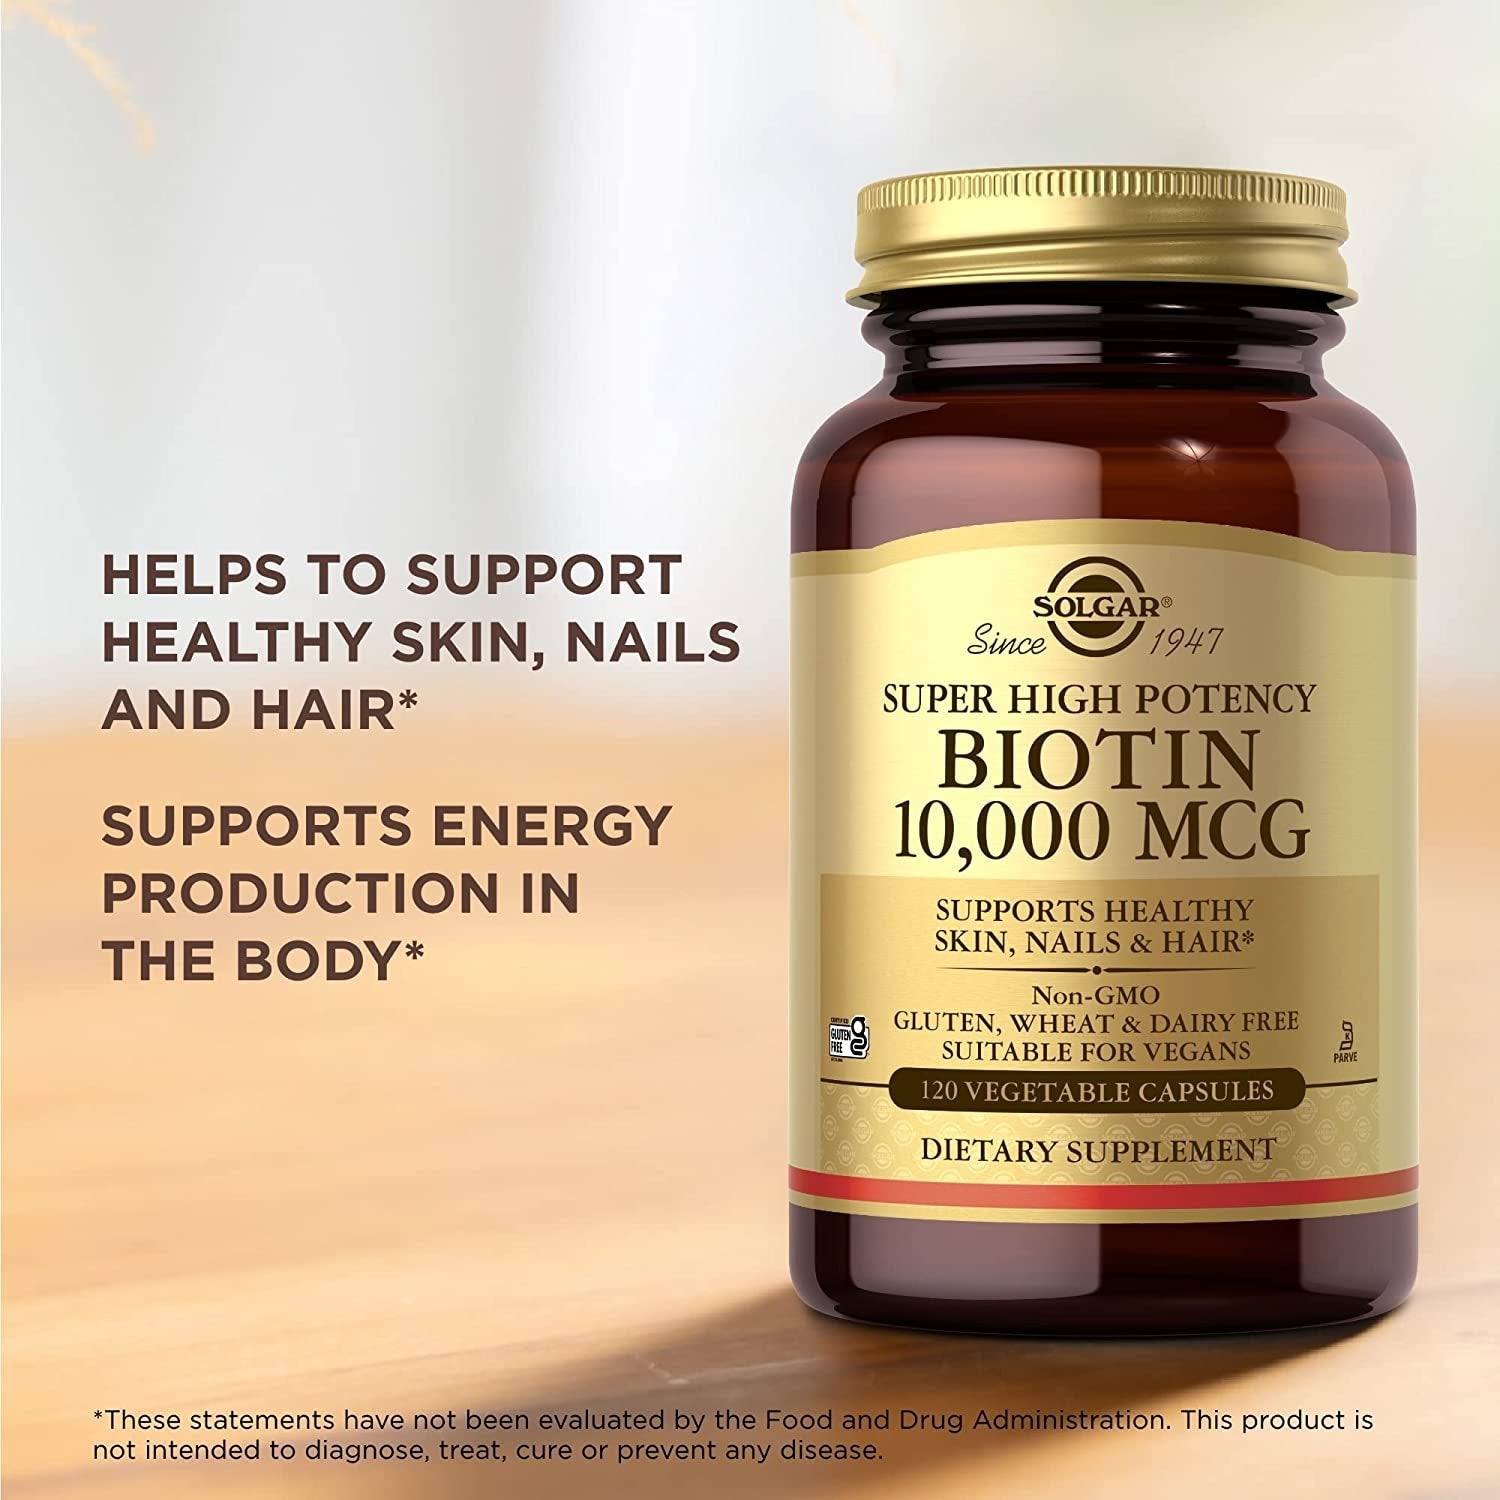 Solgar Biotin 10,000 mcg, 120 Vegetable Capsules - Pack of 2 - Energy, Metabolism, Promotes Healthy Skin, Nails & Hair - Super High Potency - Non-GMO, Vegan, Gluten & Dairy Free - 240 Total Servings